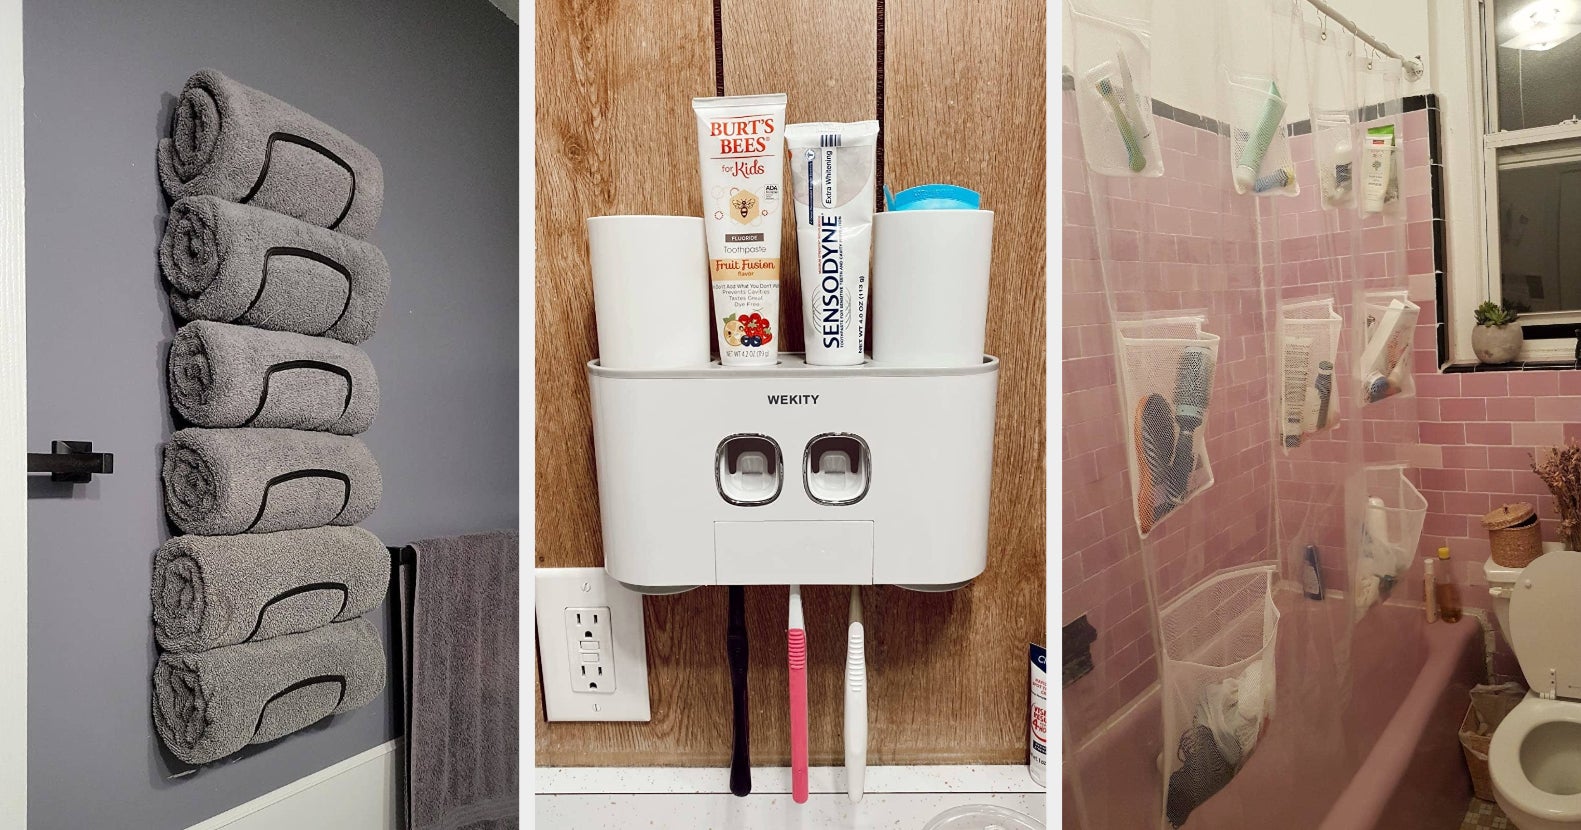 ECOCO-Corner Bathroom Organizer Shelf Shampoo Cosmetic Storage